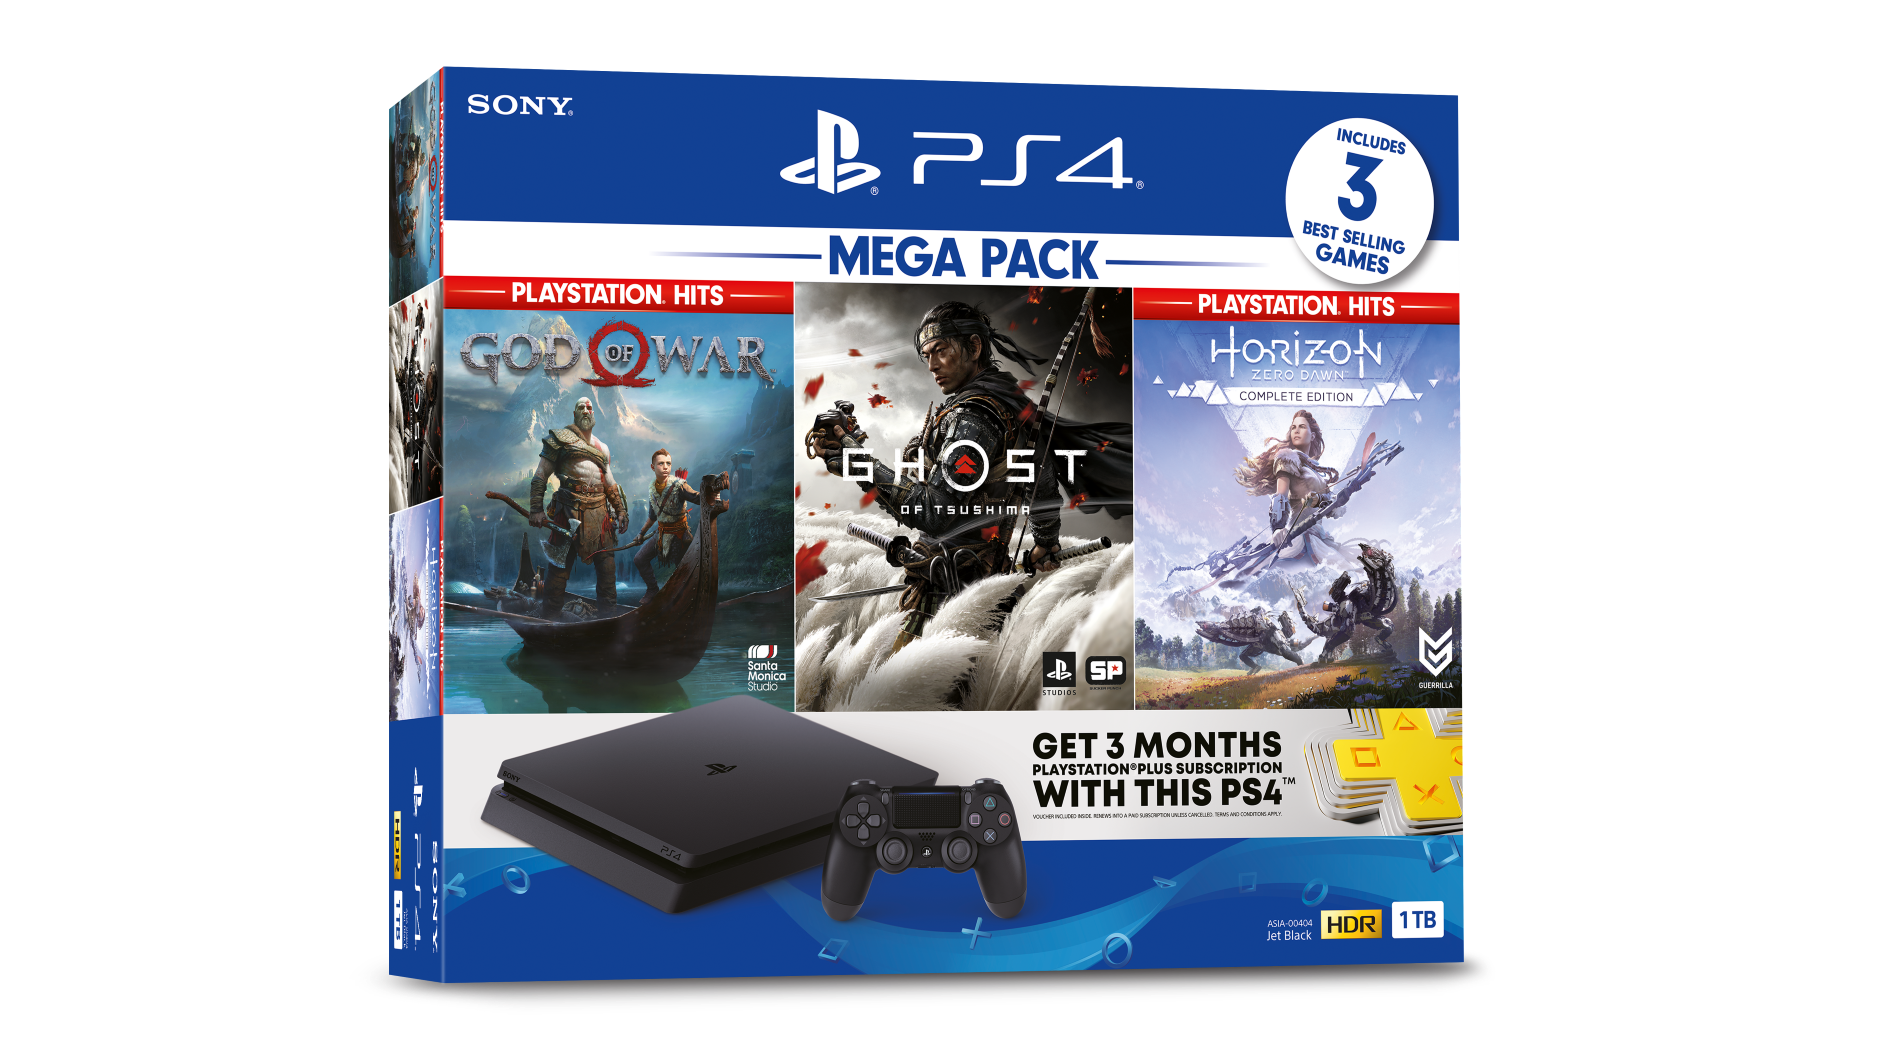 PlayStation เสนอชุดเครื่องเกมคอนโซล PlayStation 4 ใหม่ “PlayStation®4 MEGA PACK” มาพร้อมเกมที่มียอดขายสูงสุด วางจำหน่ายวันพฤหัสบดีที่ 15 กรกฎาคมนี้